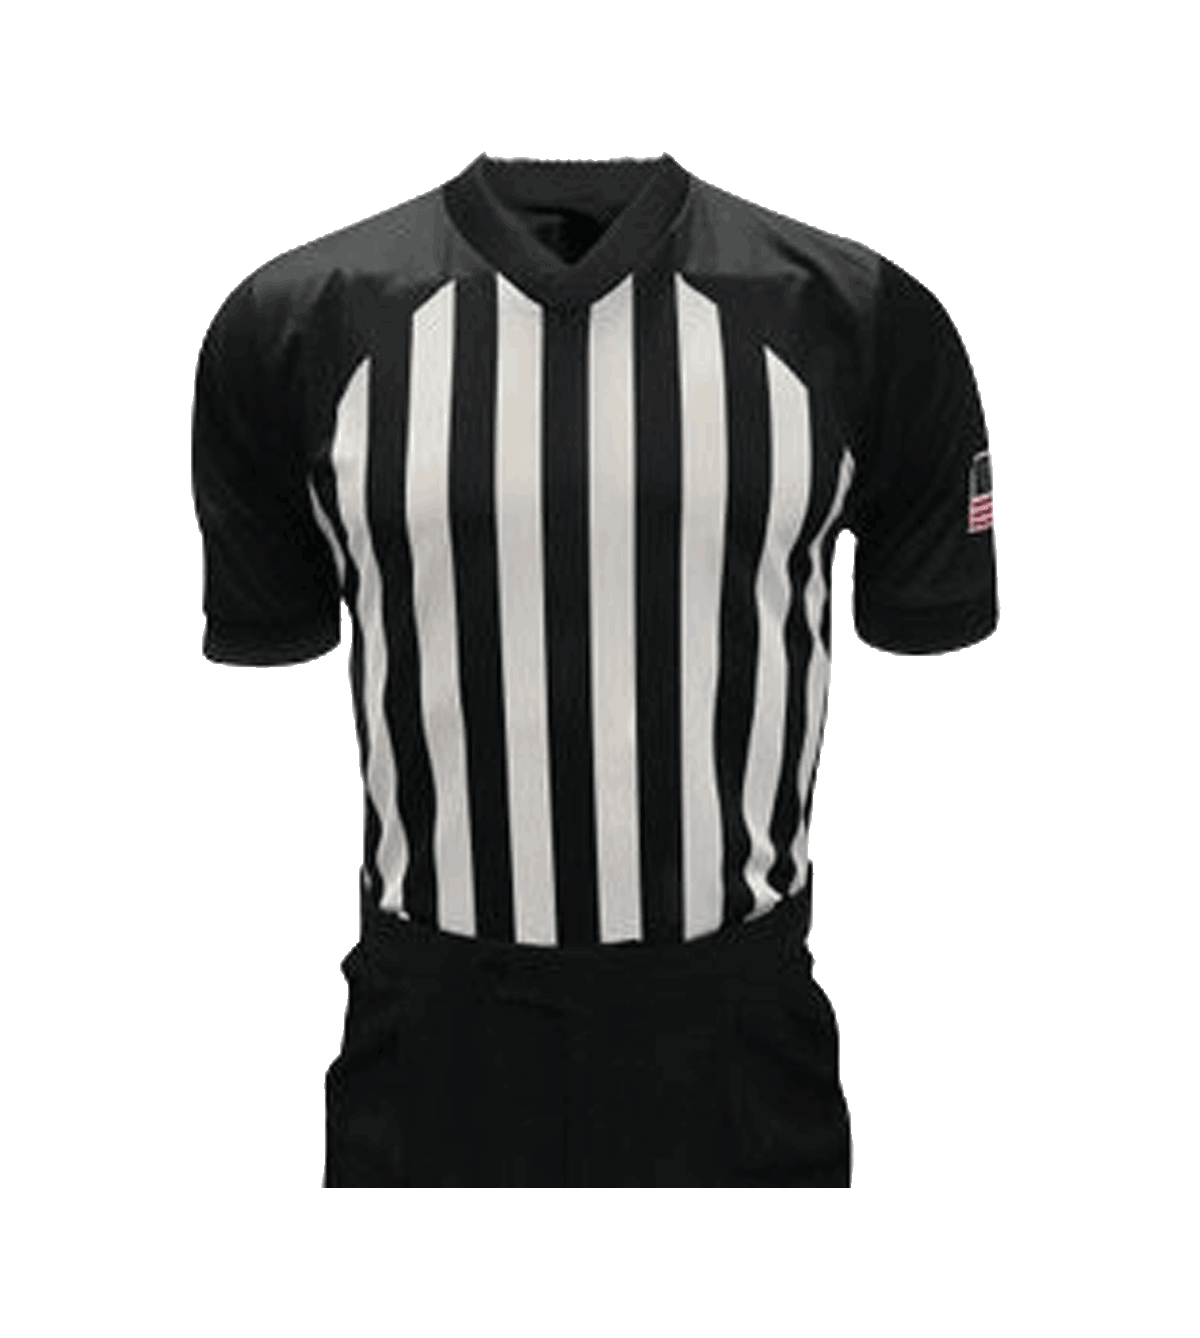 HONIG'S NCAA Approved Basketball Shirt